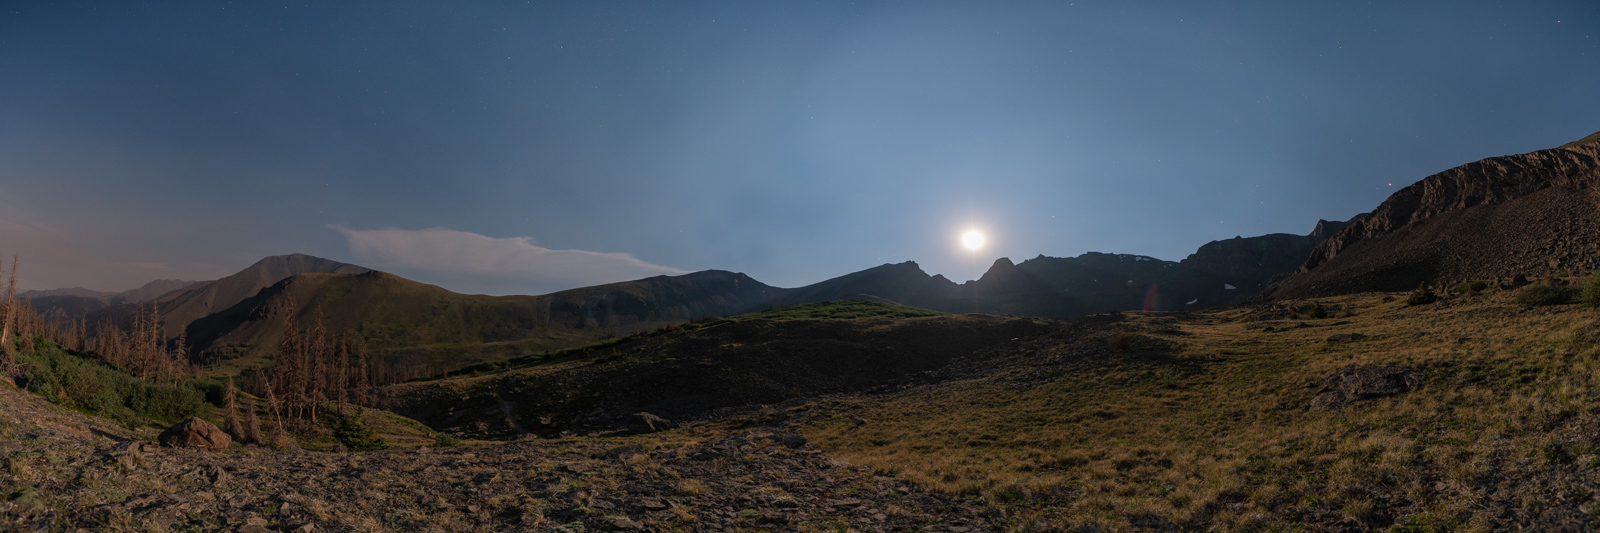 Moonrise Panorama over San Luis Peak